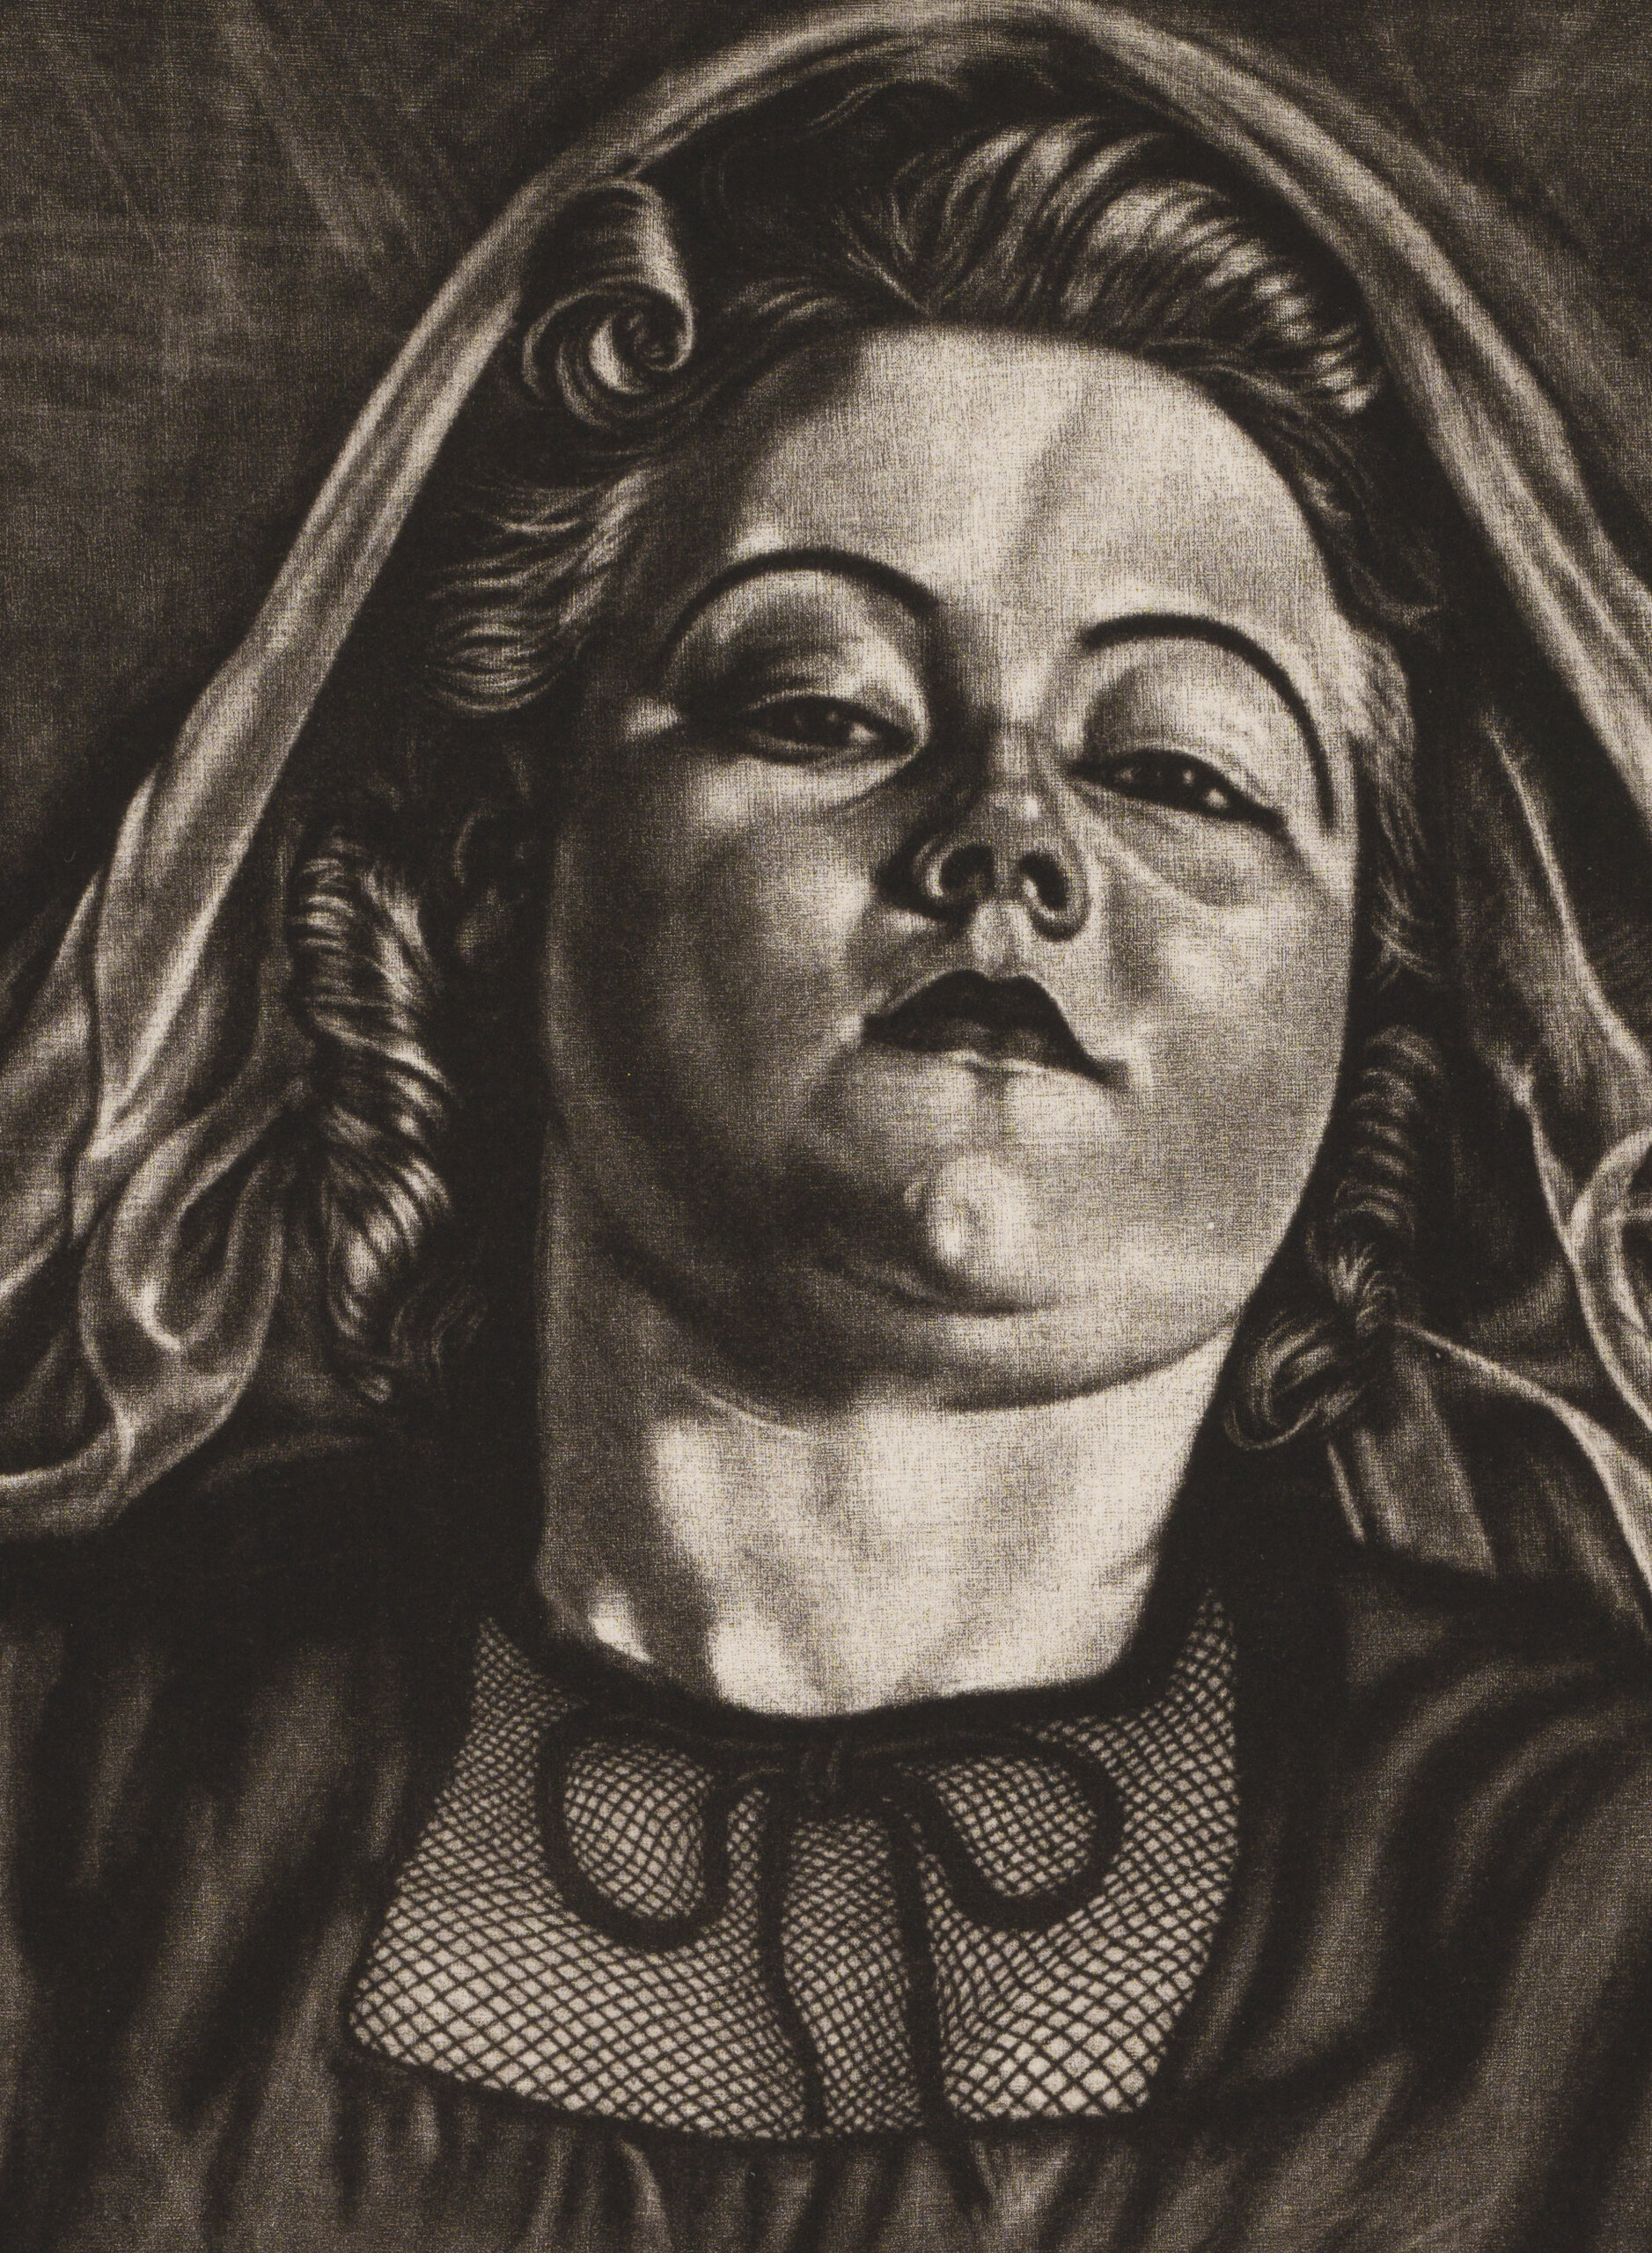 Eduard Wiiralt “Istuv daam”, 1941. Plm 49,4 x 31,8 cm